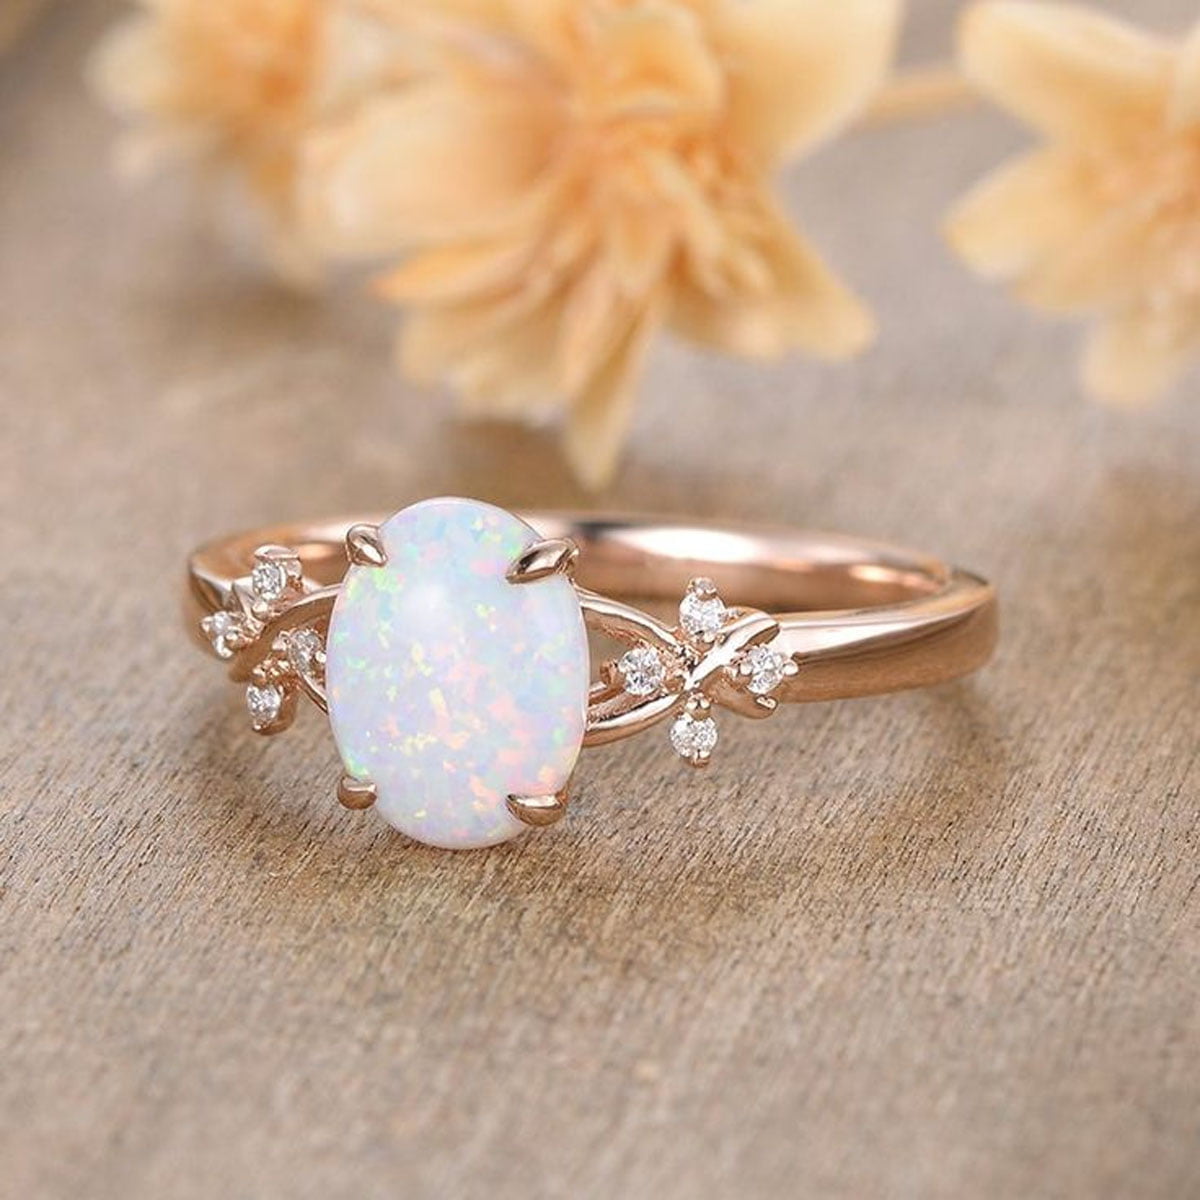 Choosing Gemstones for Engagement Rings: A Guide